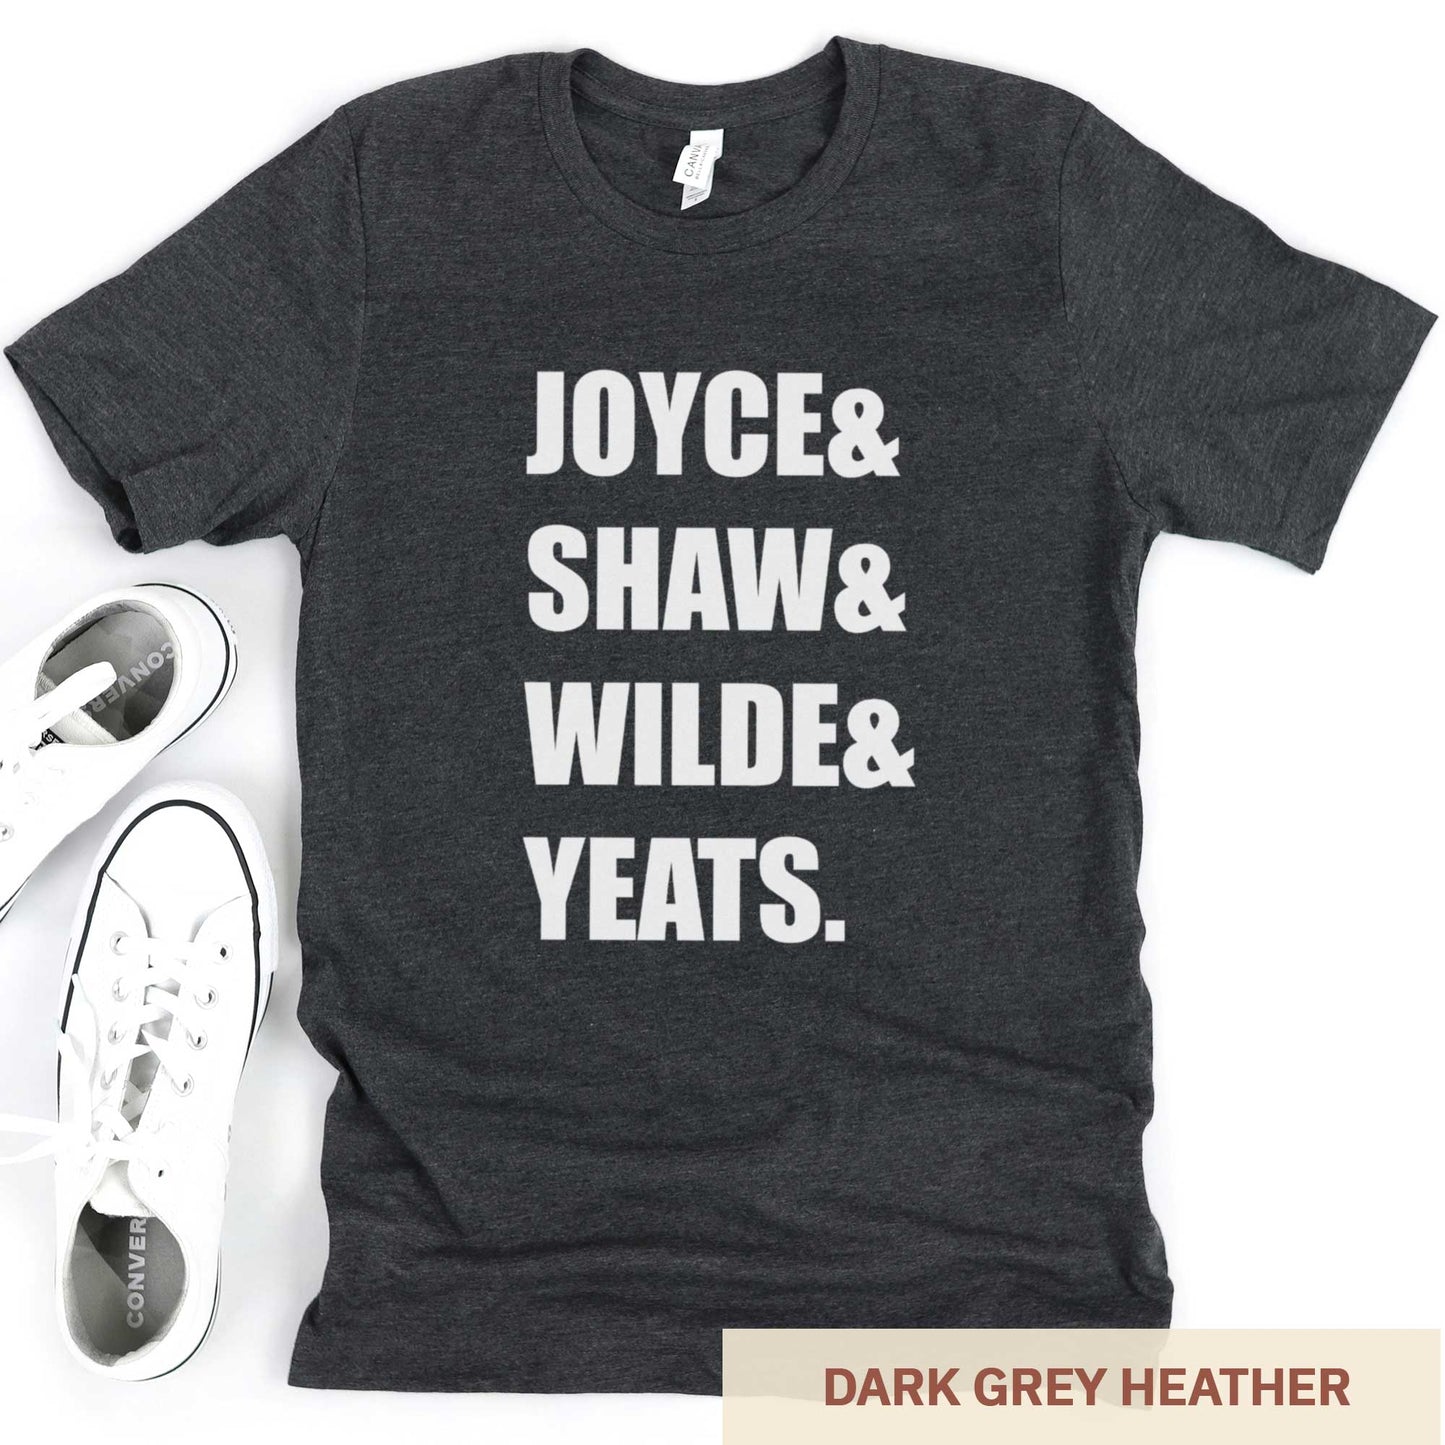 A dark grey heather Bella Canvas t-shirt featuring the last names of Irish writers Joyce, Shaw, Wilde and Yeats.